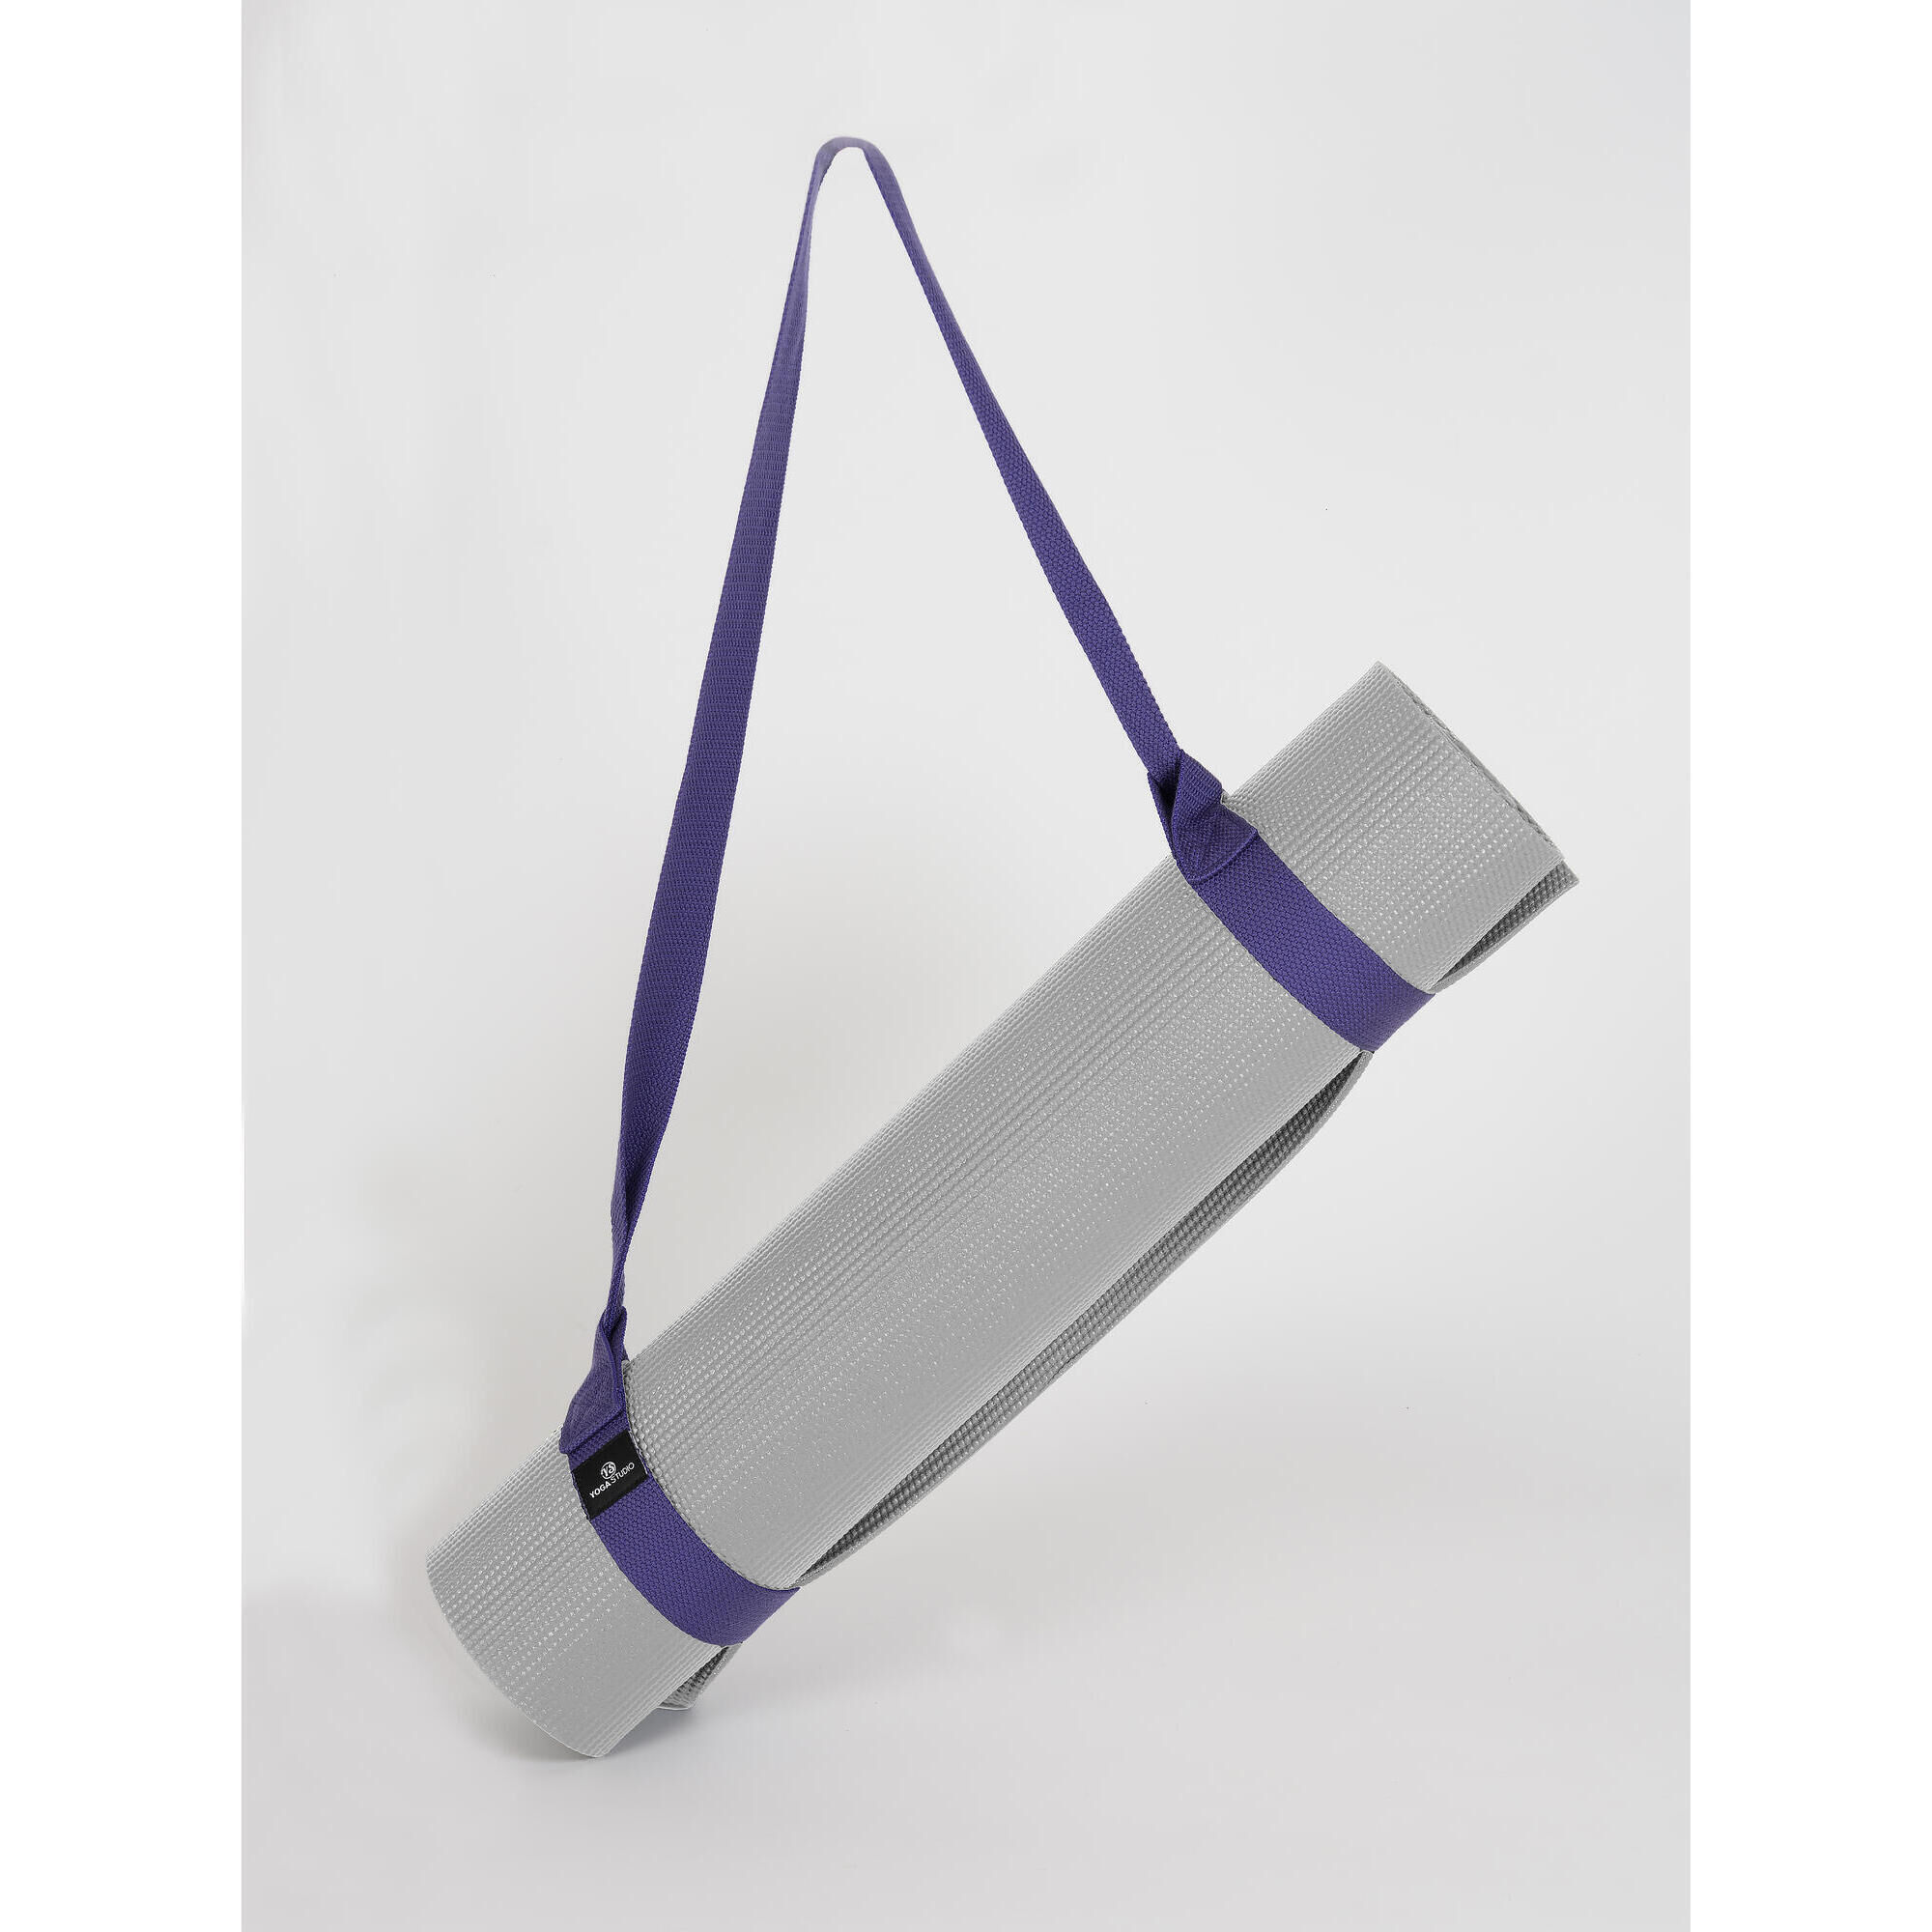 YOGA STUDIO Yoga Studio Yoga Mat Strap Carrier - Purple